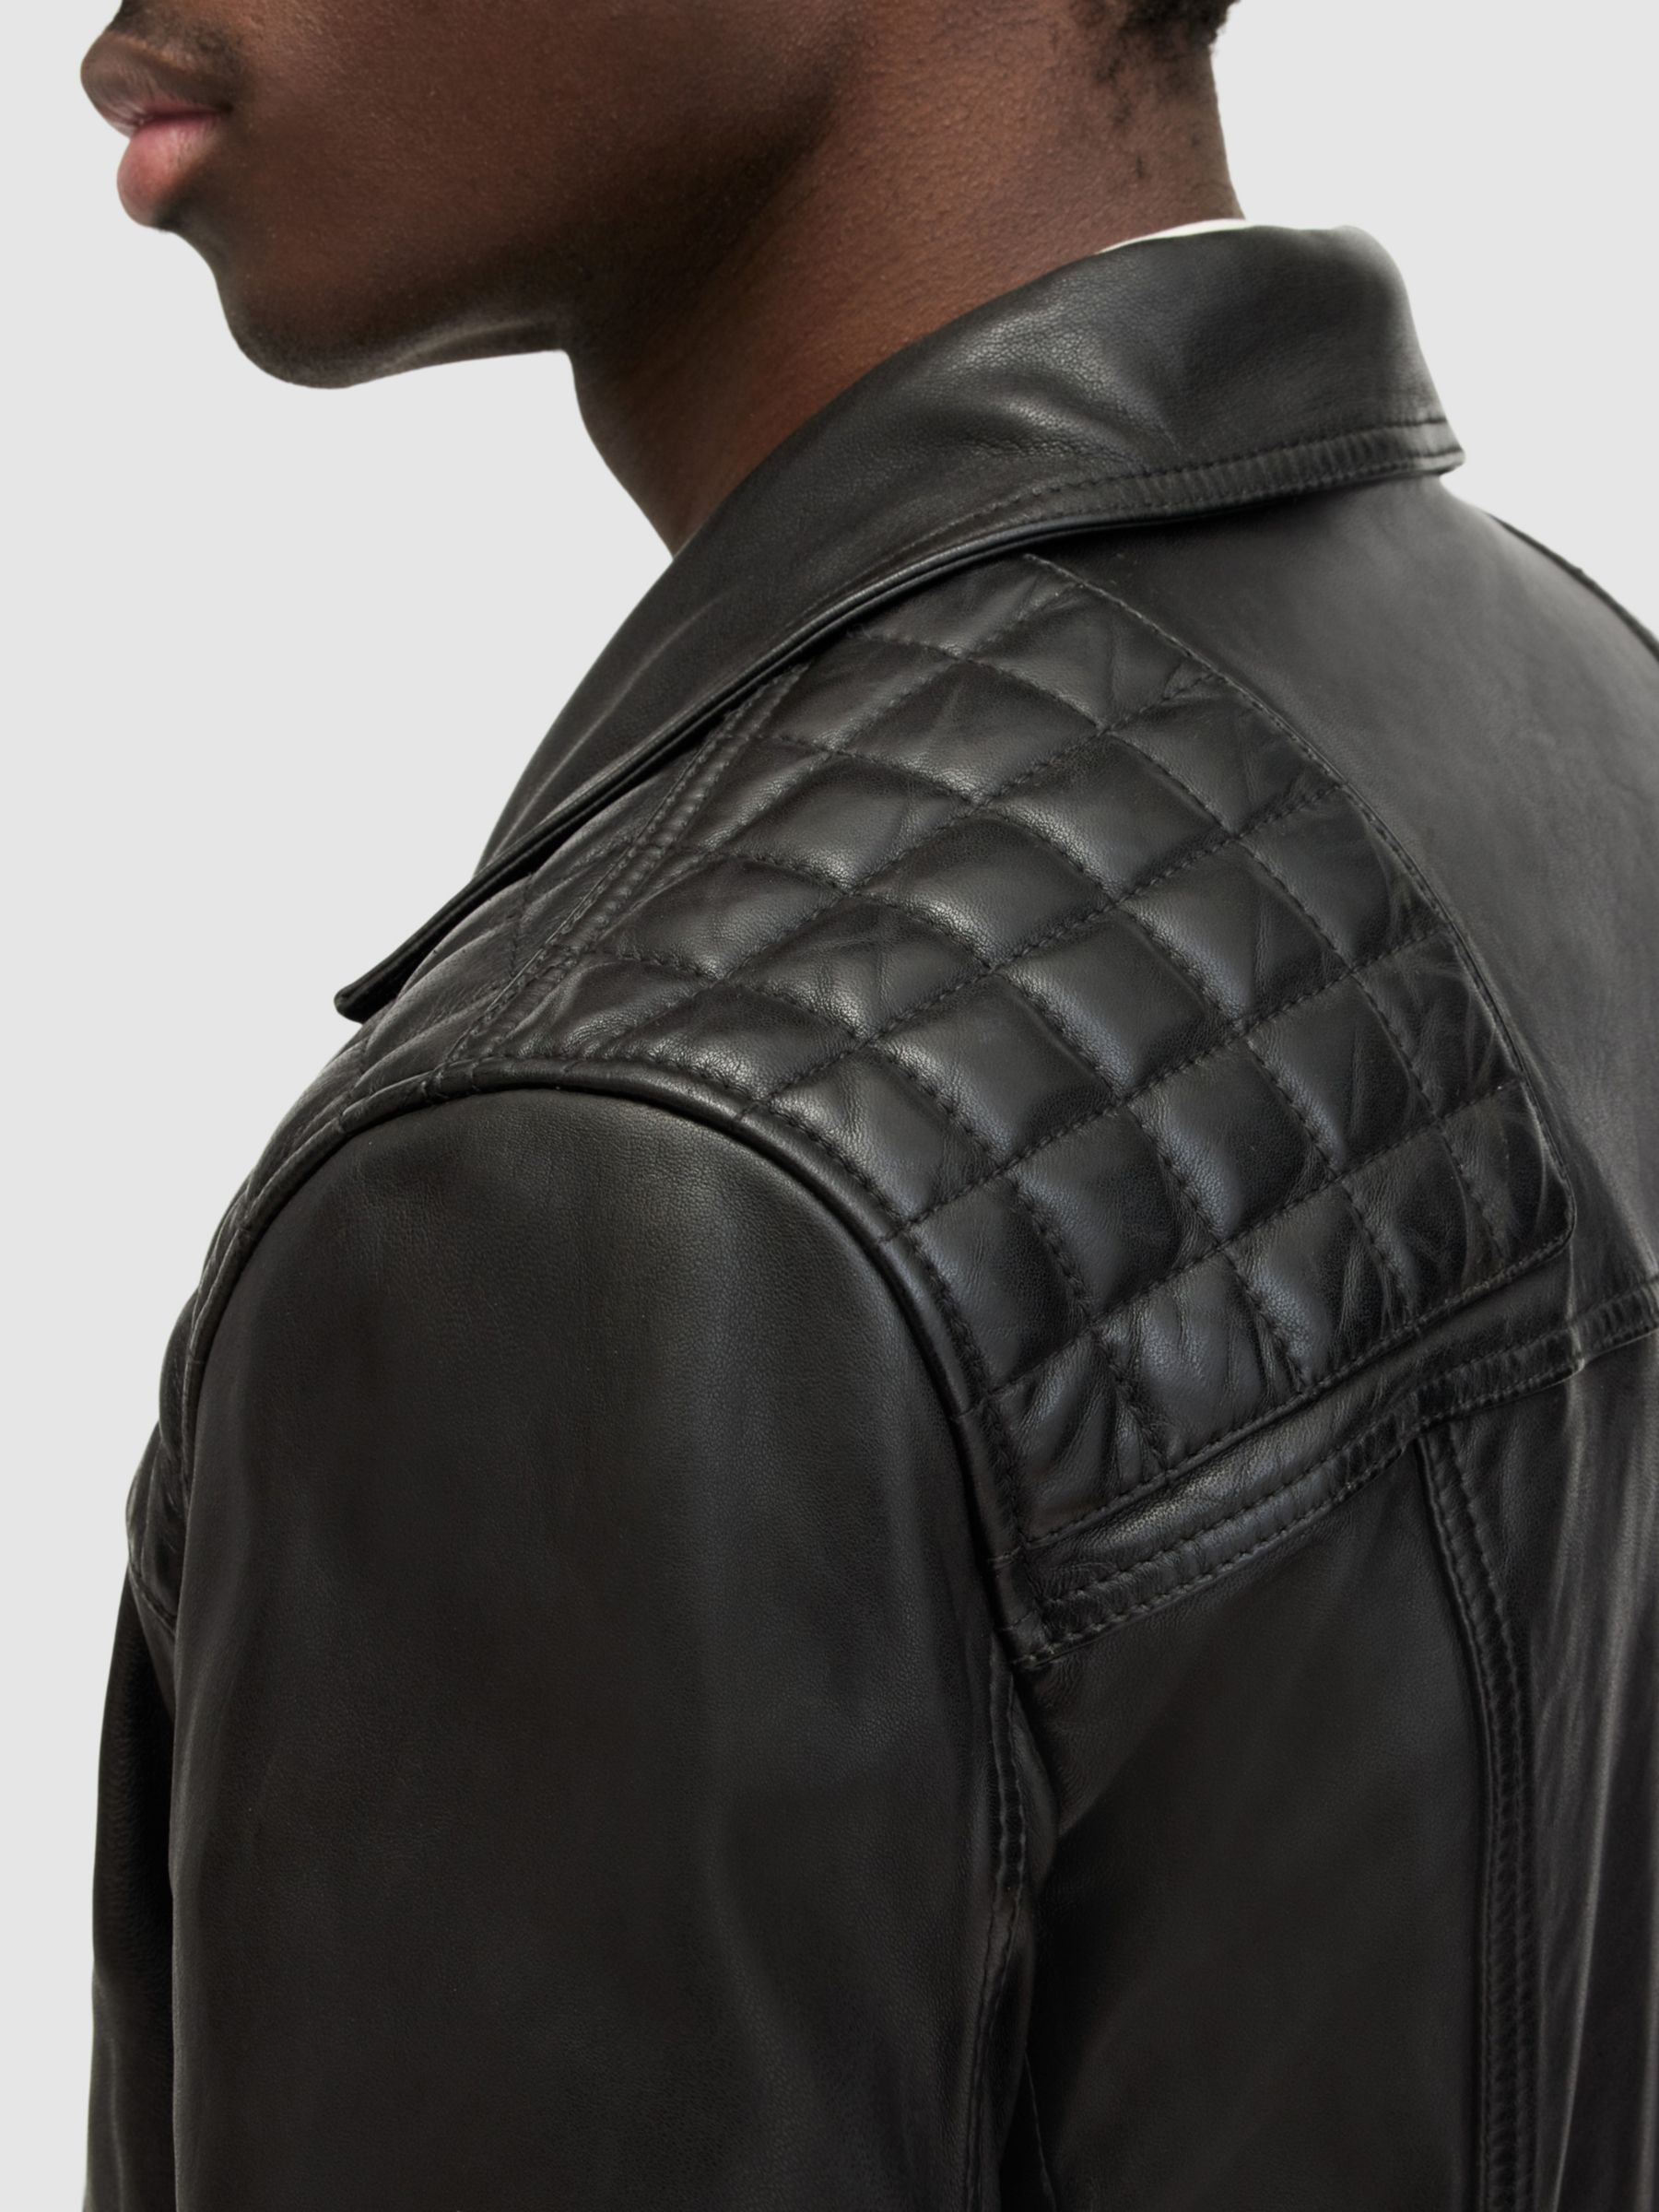 AllSaints Conroy Leather Biker Jacket, Black, L